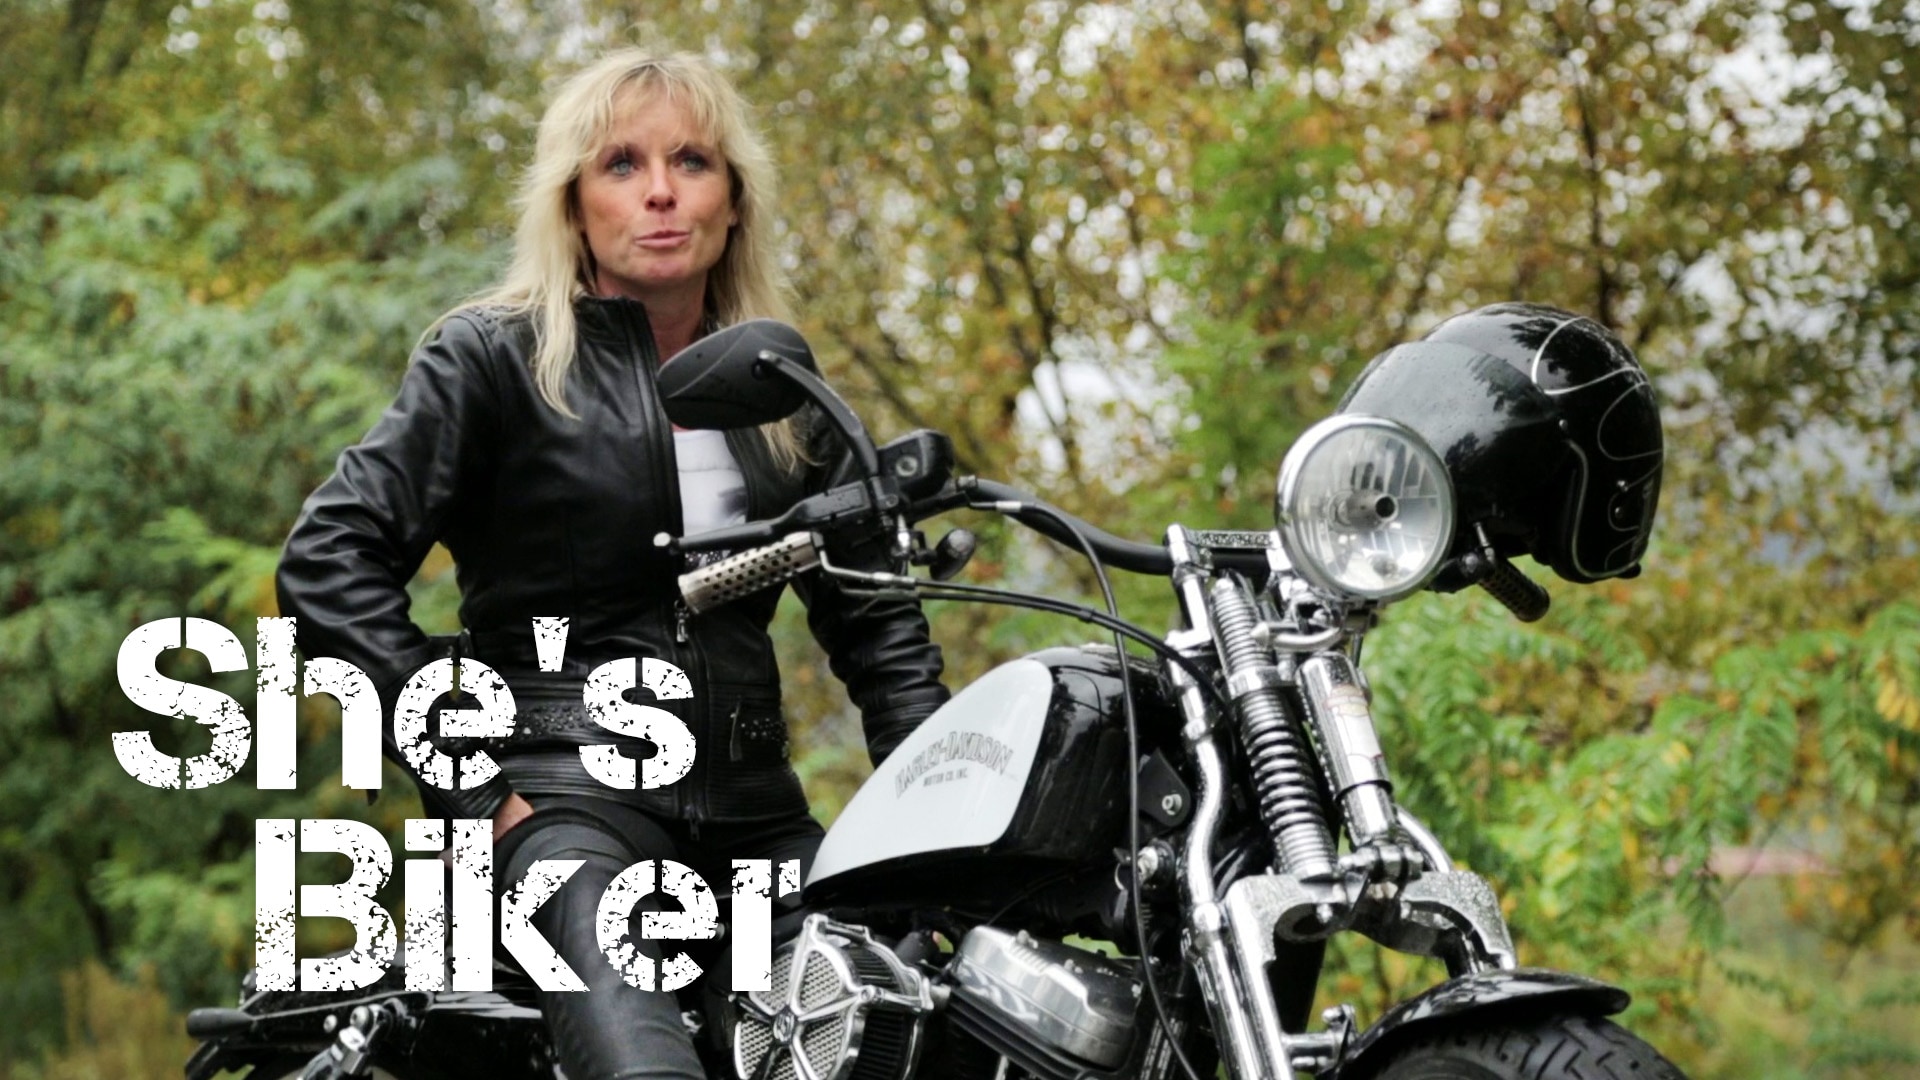 She's biker: la moto è donna